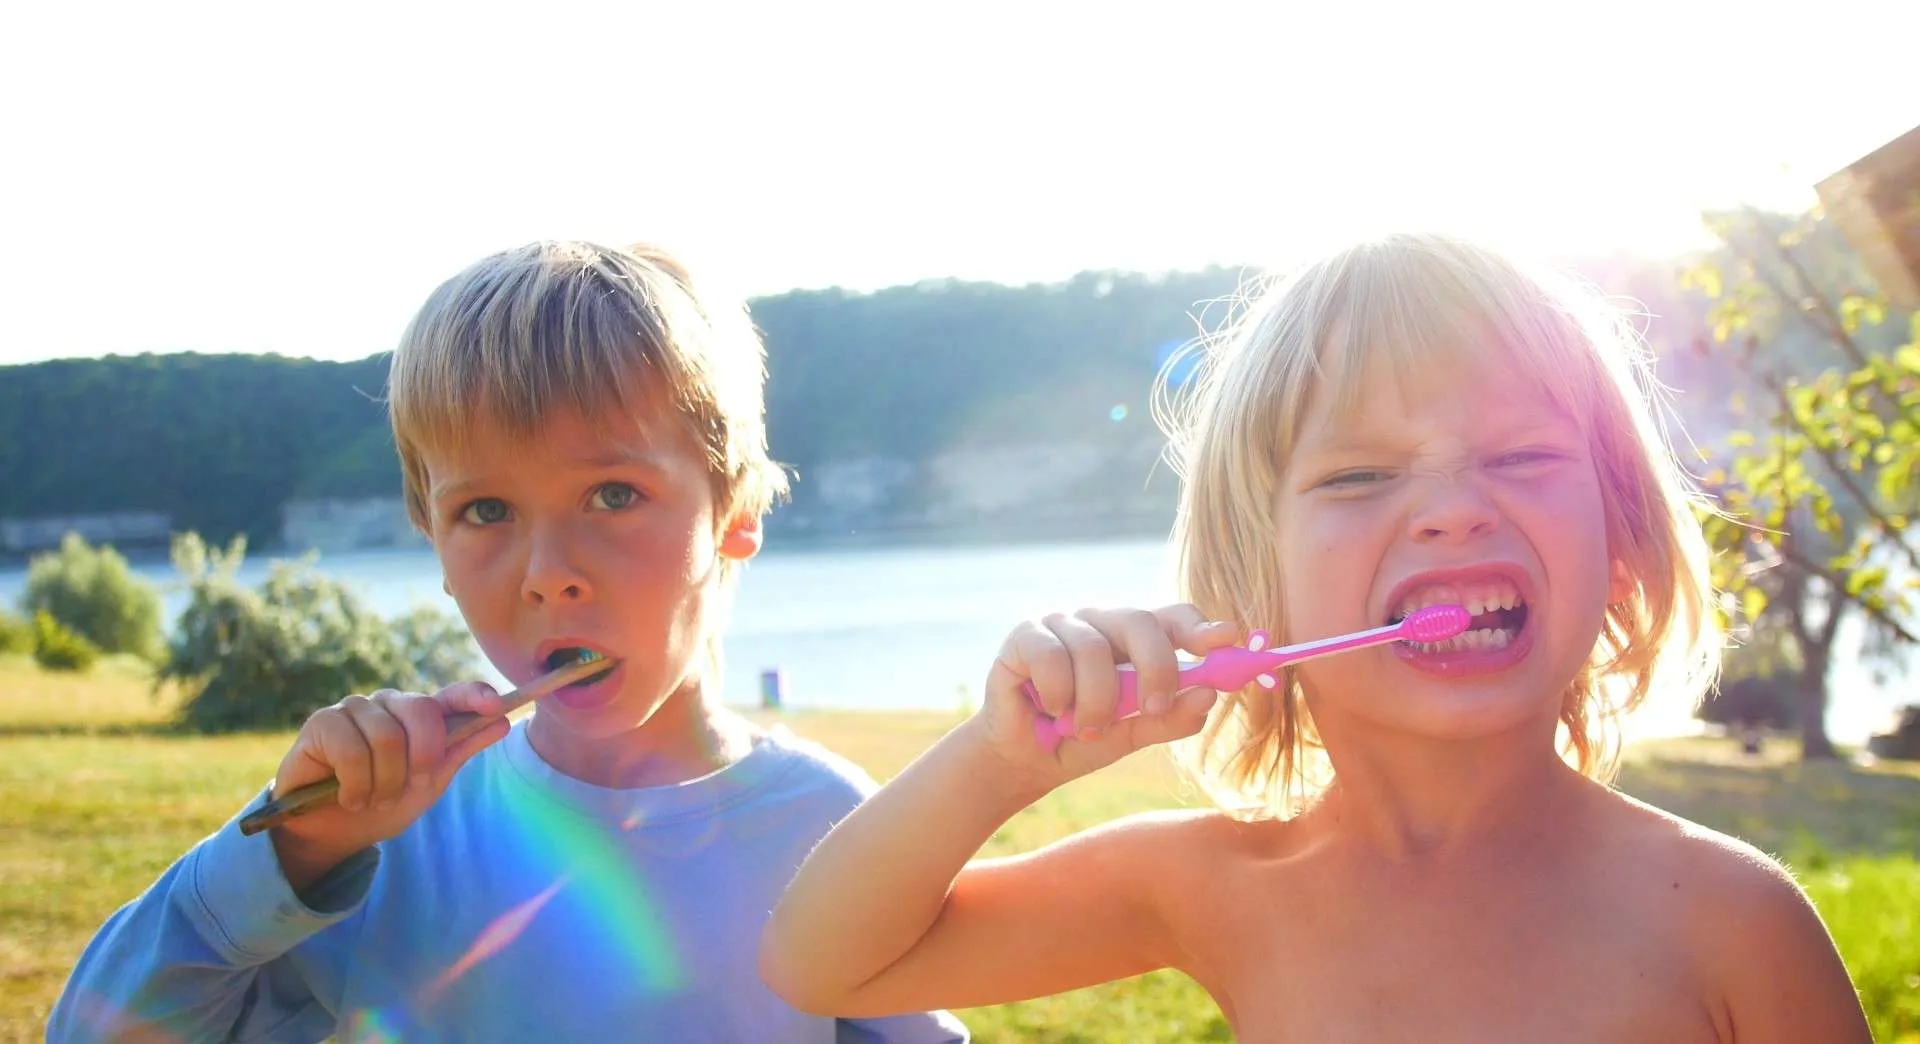 Two kids brushing teeth with toothbrush